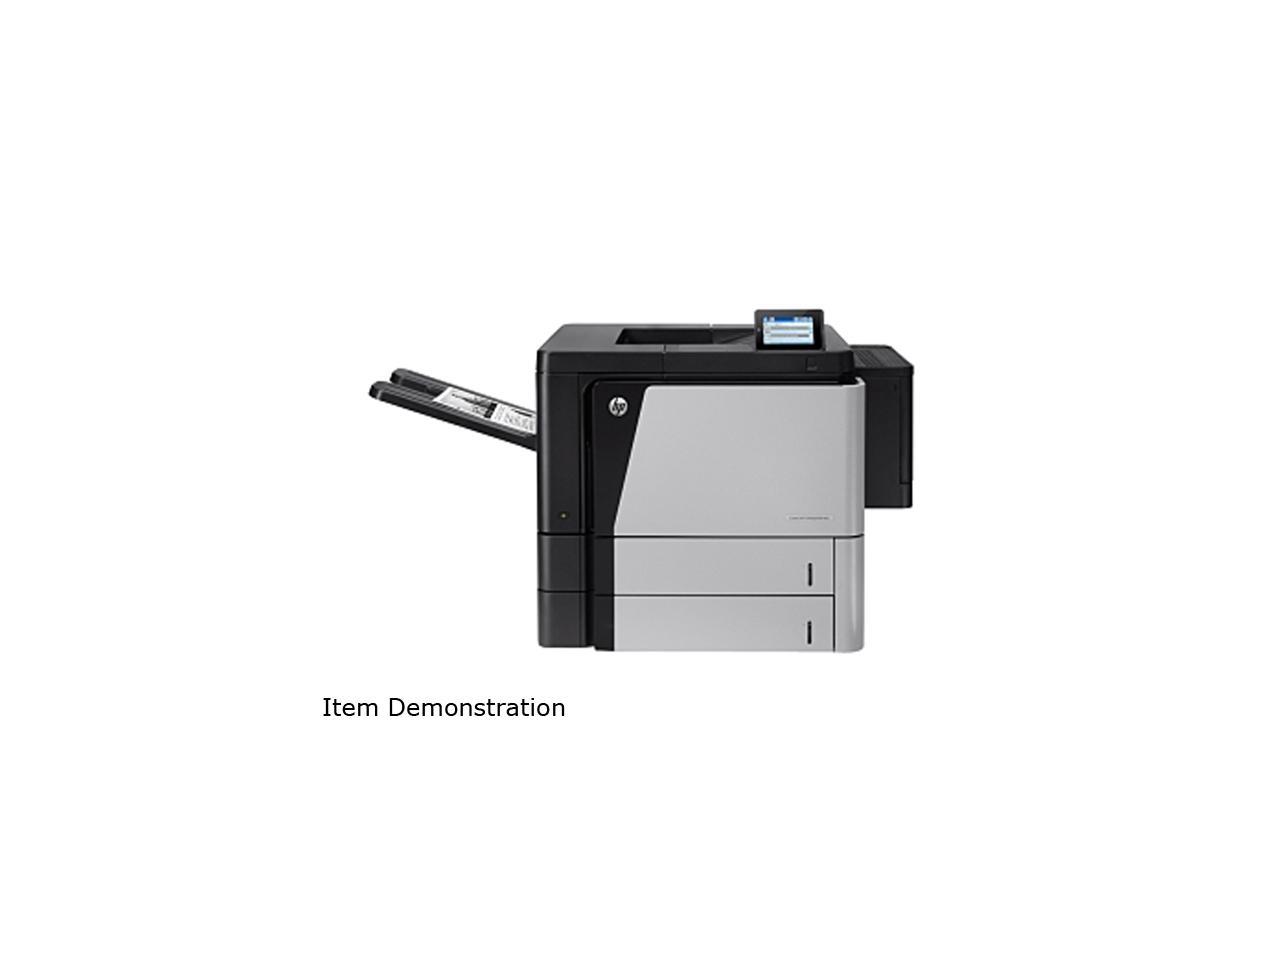 HP LaserJet Enterprise M806dn (CZ244A) 1200 x 1200 dpi USB / Ethernt Monochrome Laser Printer - image 4 of 4